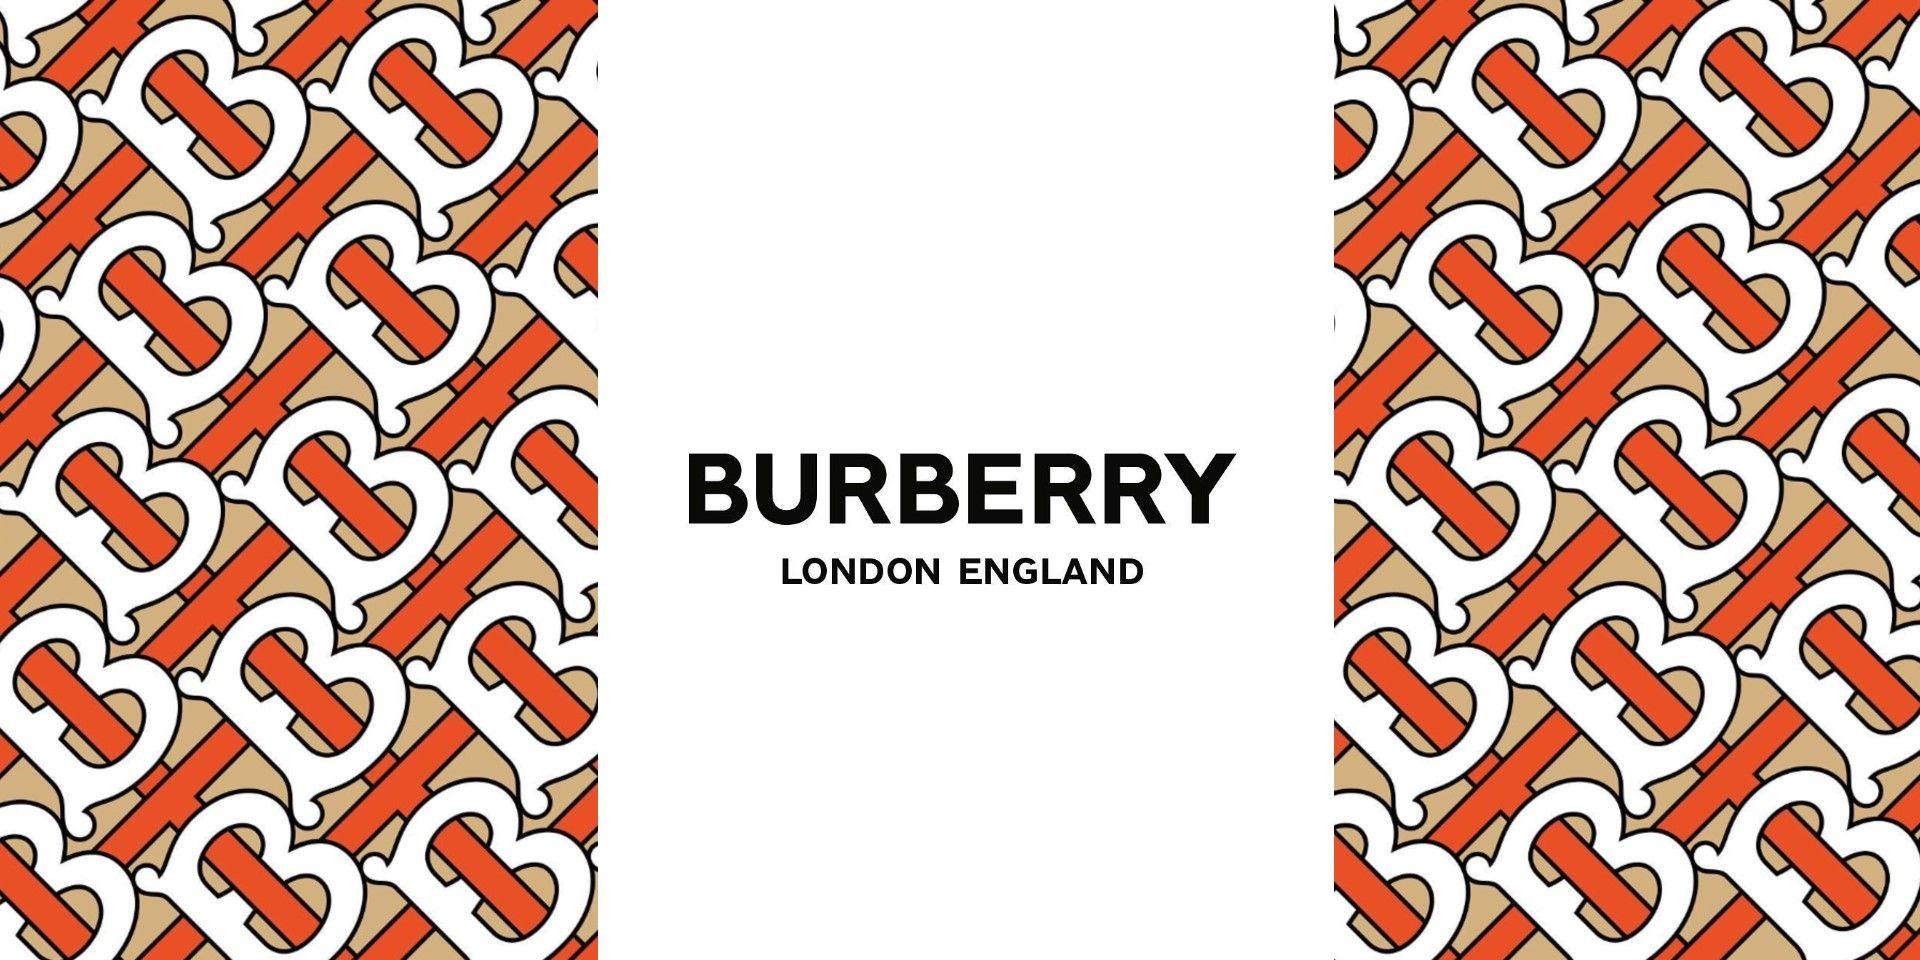 New Burberry Logo - New Burberry logo and monogram revealed - The Oxford Magazine